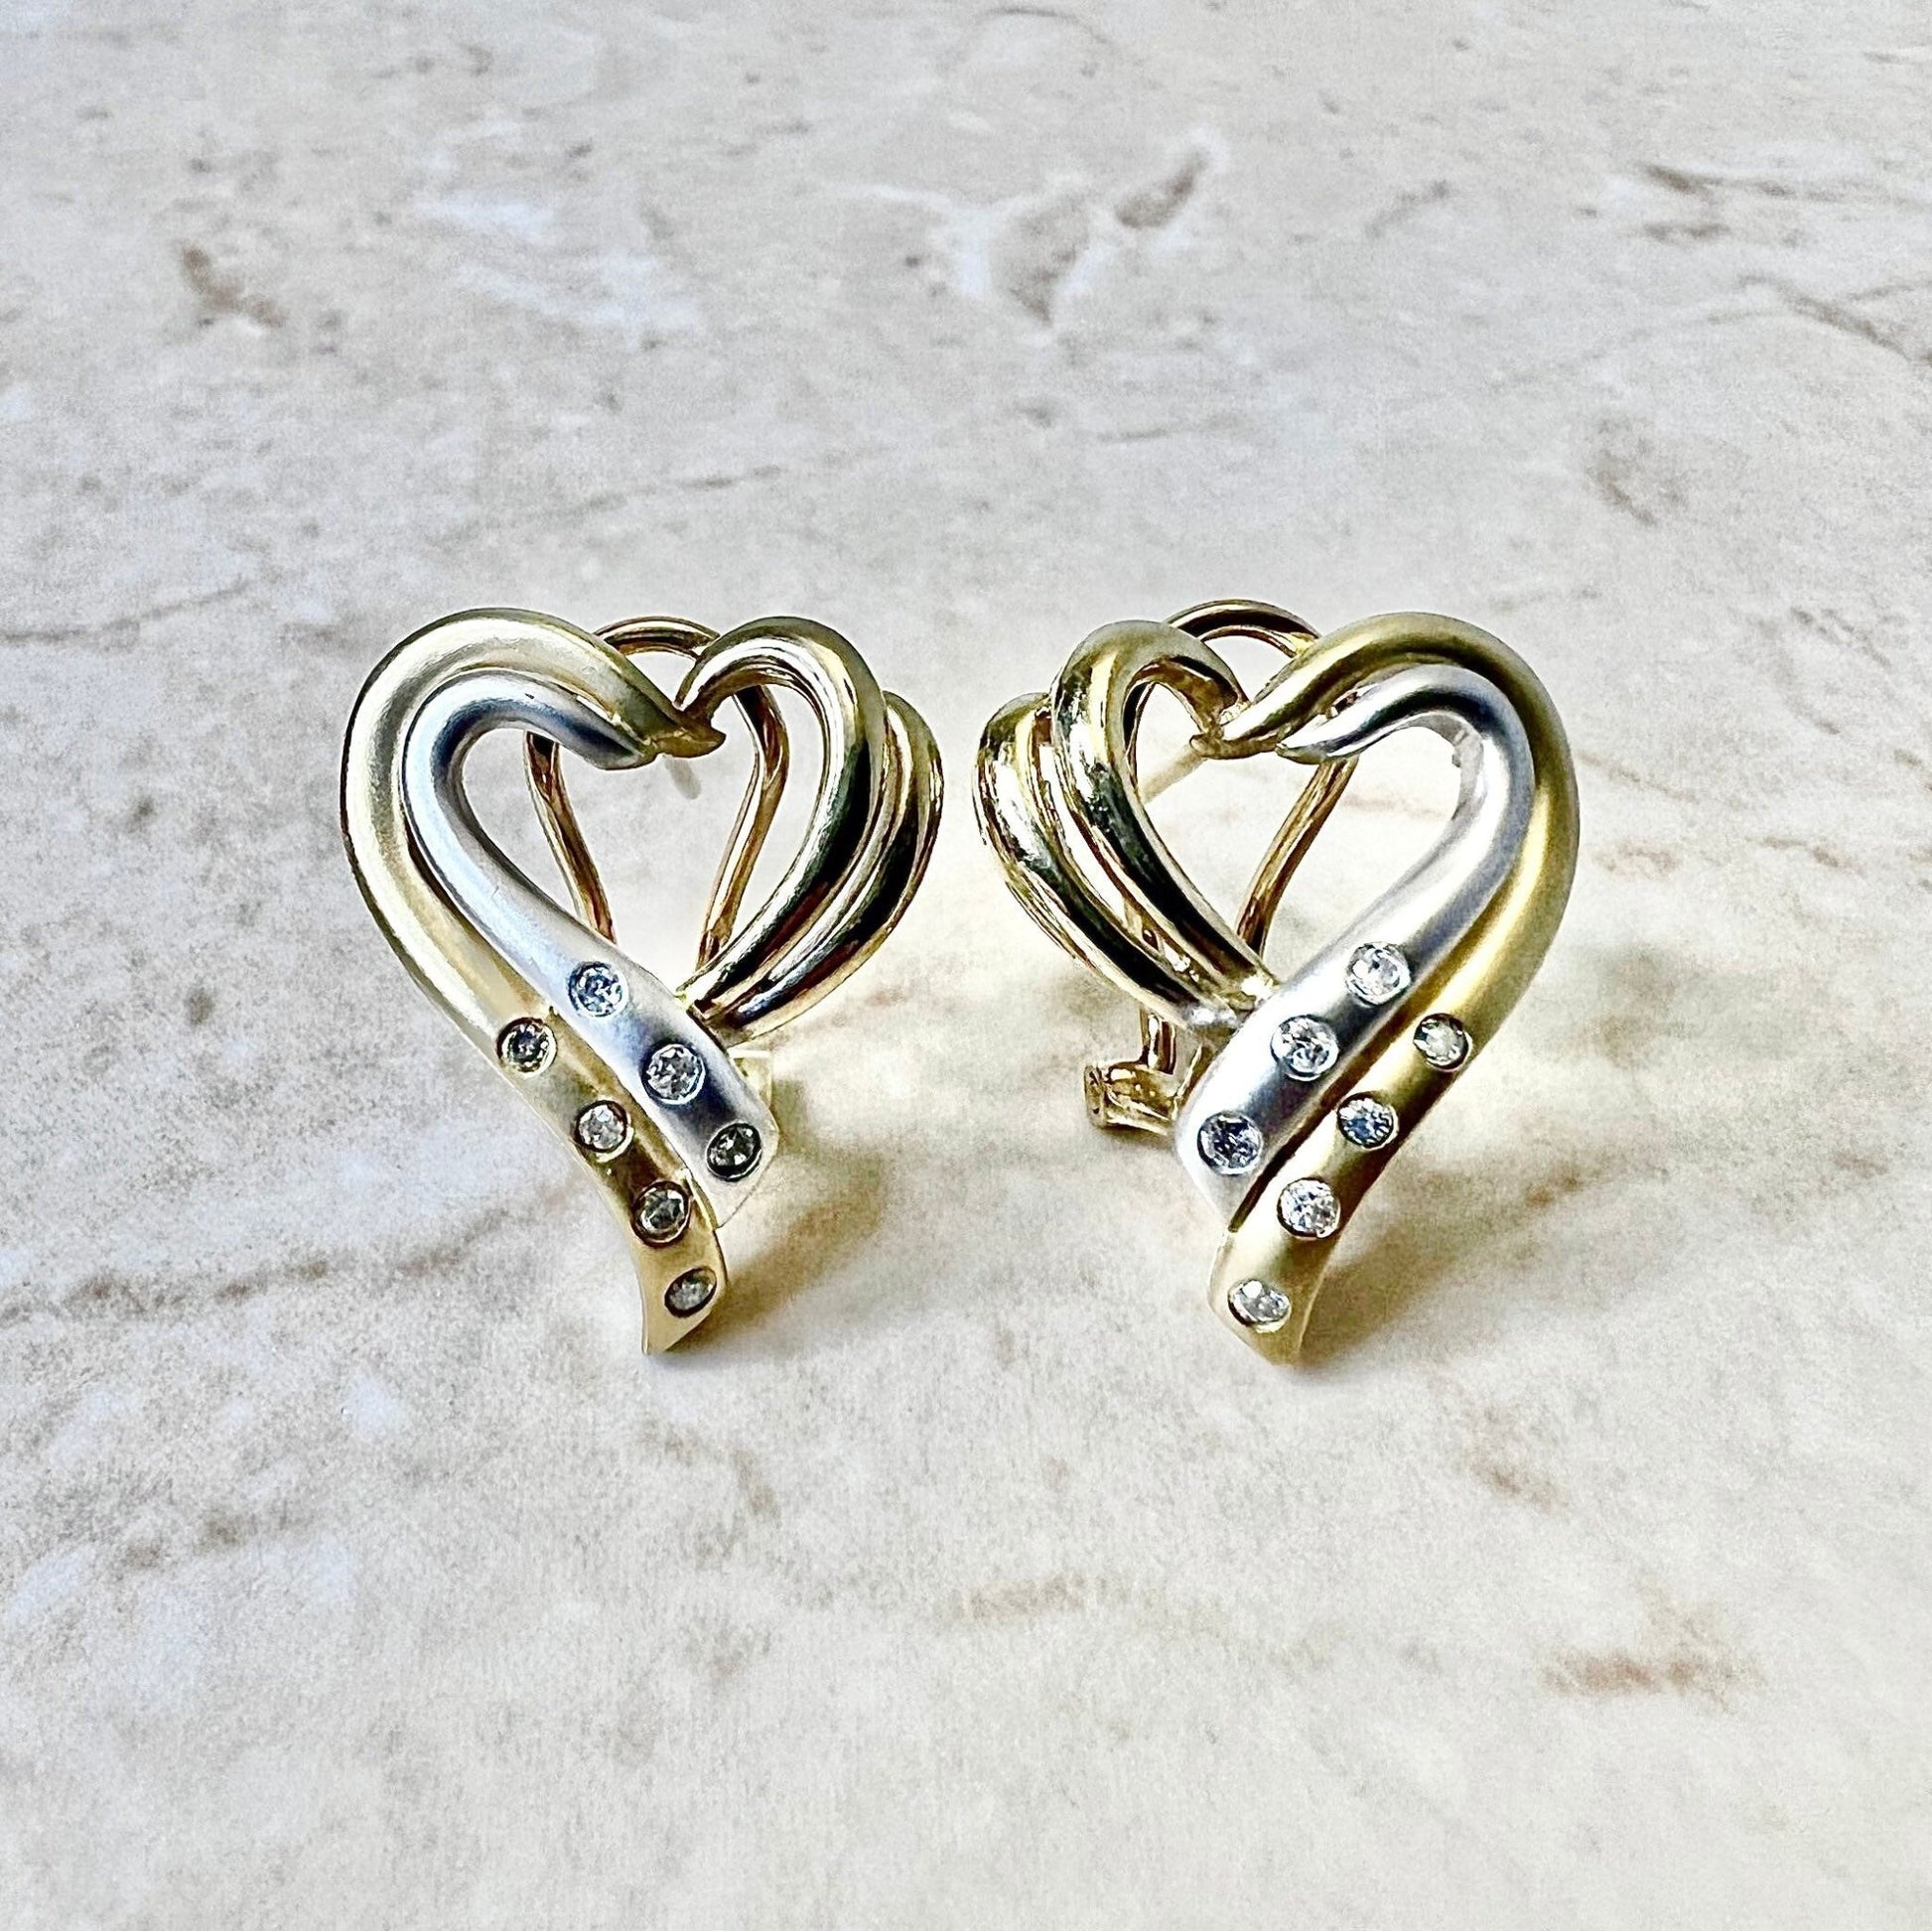 Vintage 14K Diamond Heart Stud Earrings - Two Tone Gold Earrings - Birthday Gift - Christmas Gift - Holiday Gift - Anniversary Gift